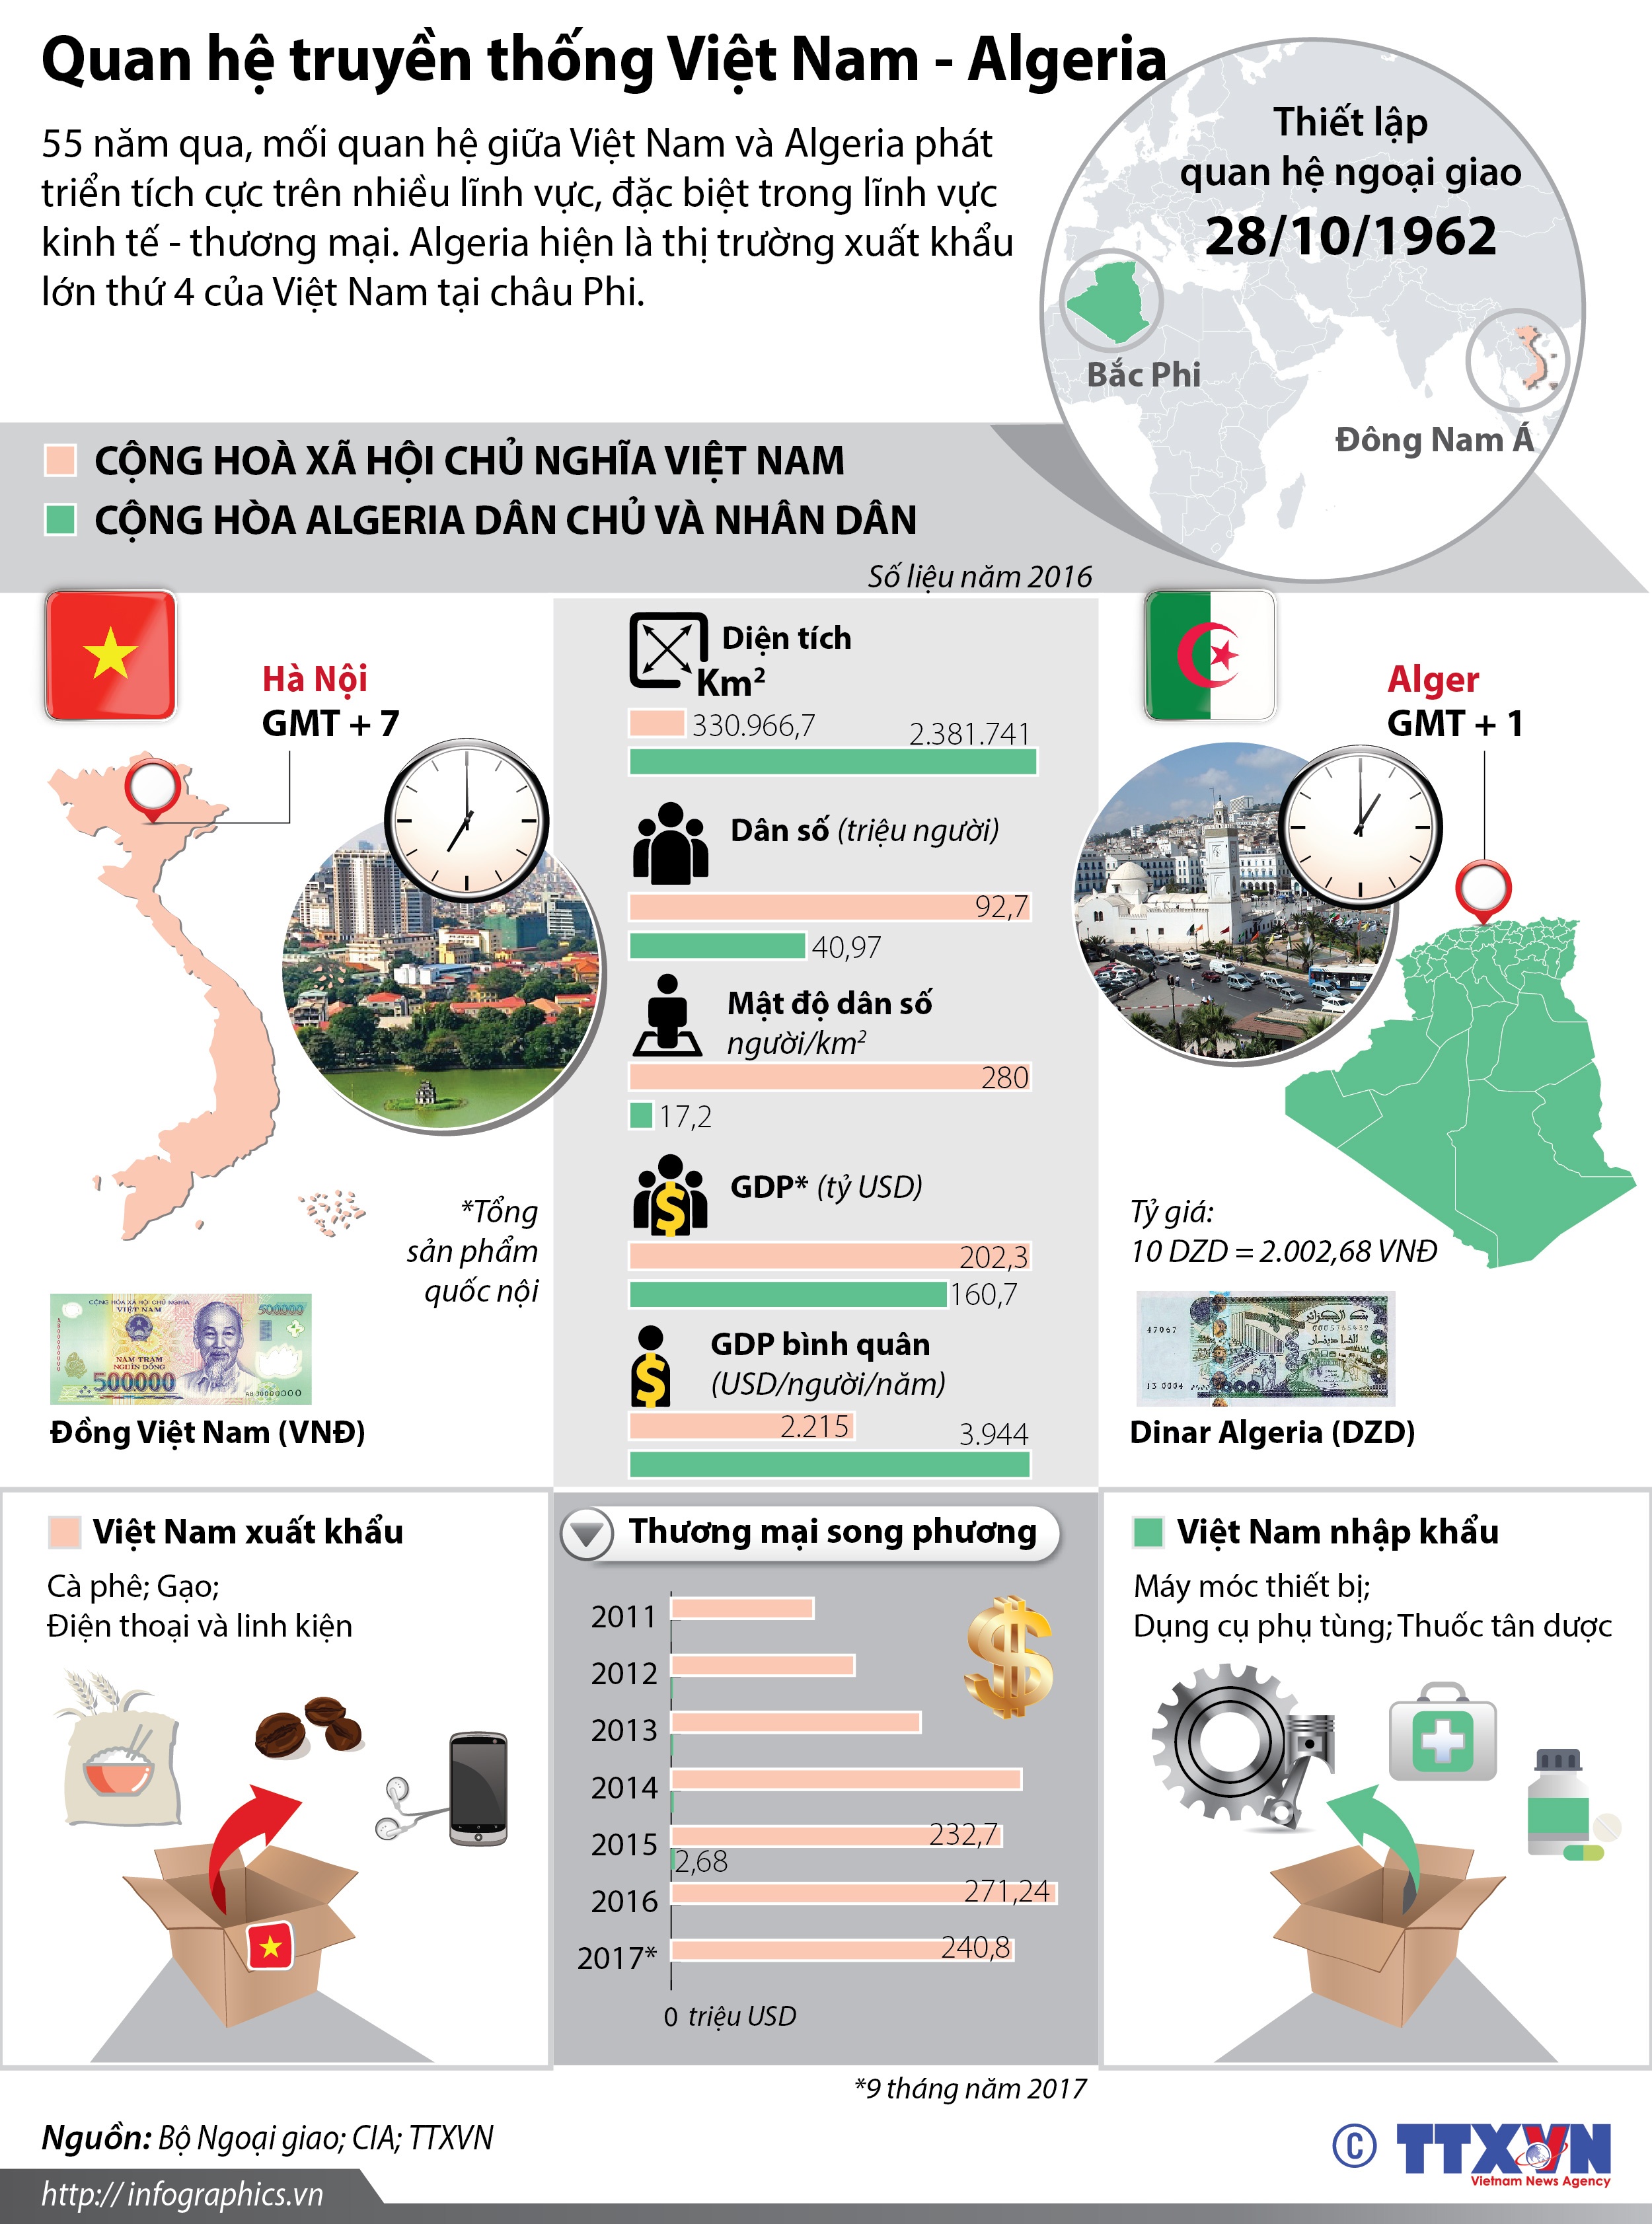 infographics 55 nam quan he truyen thong viet nam algeria